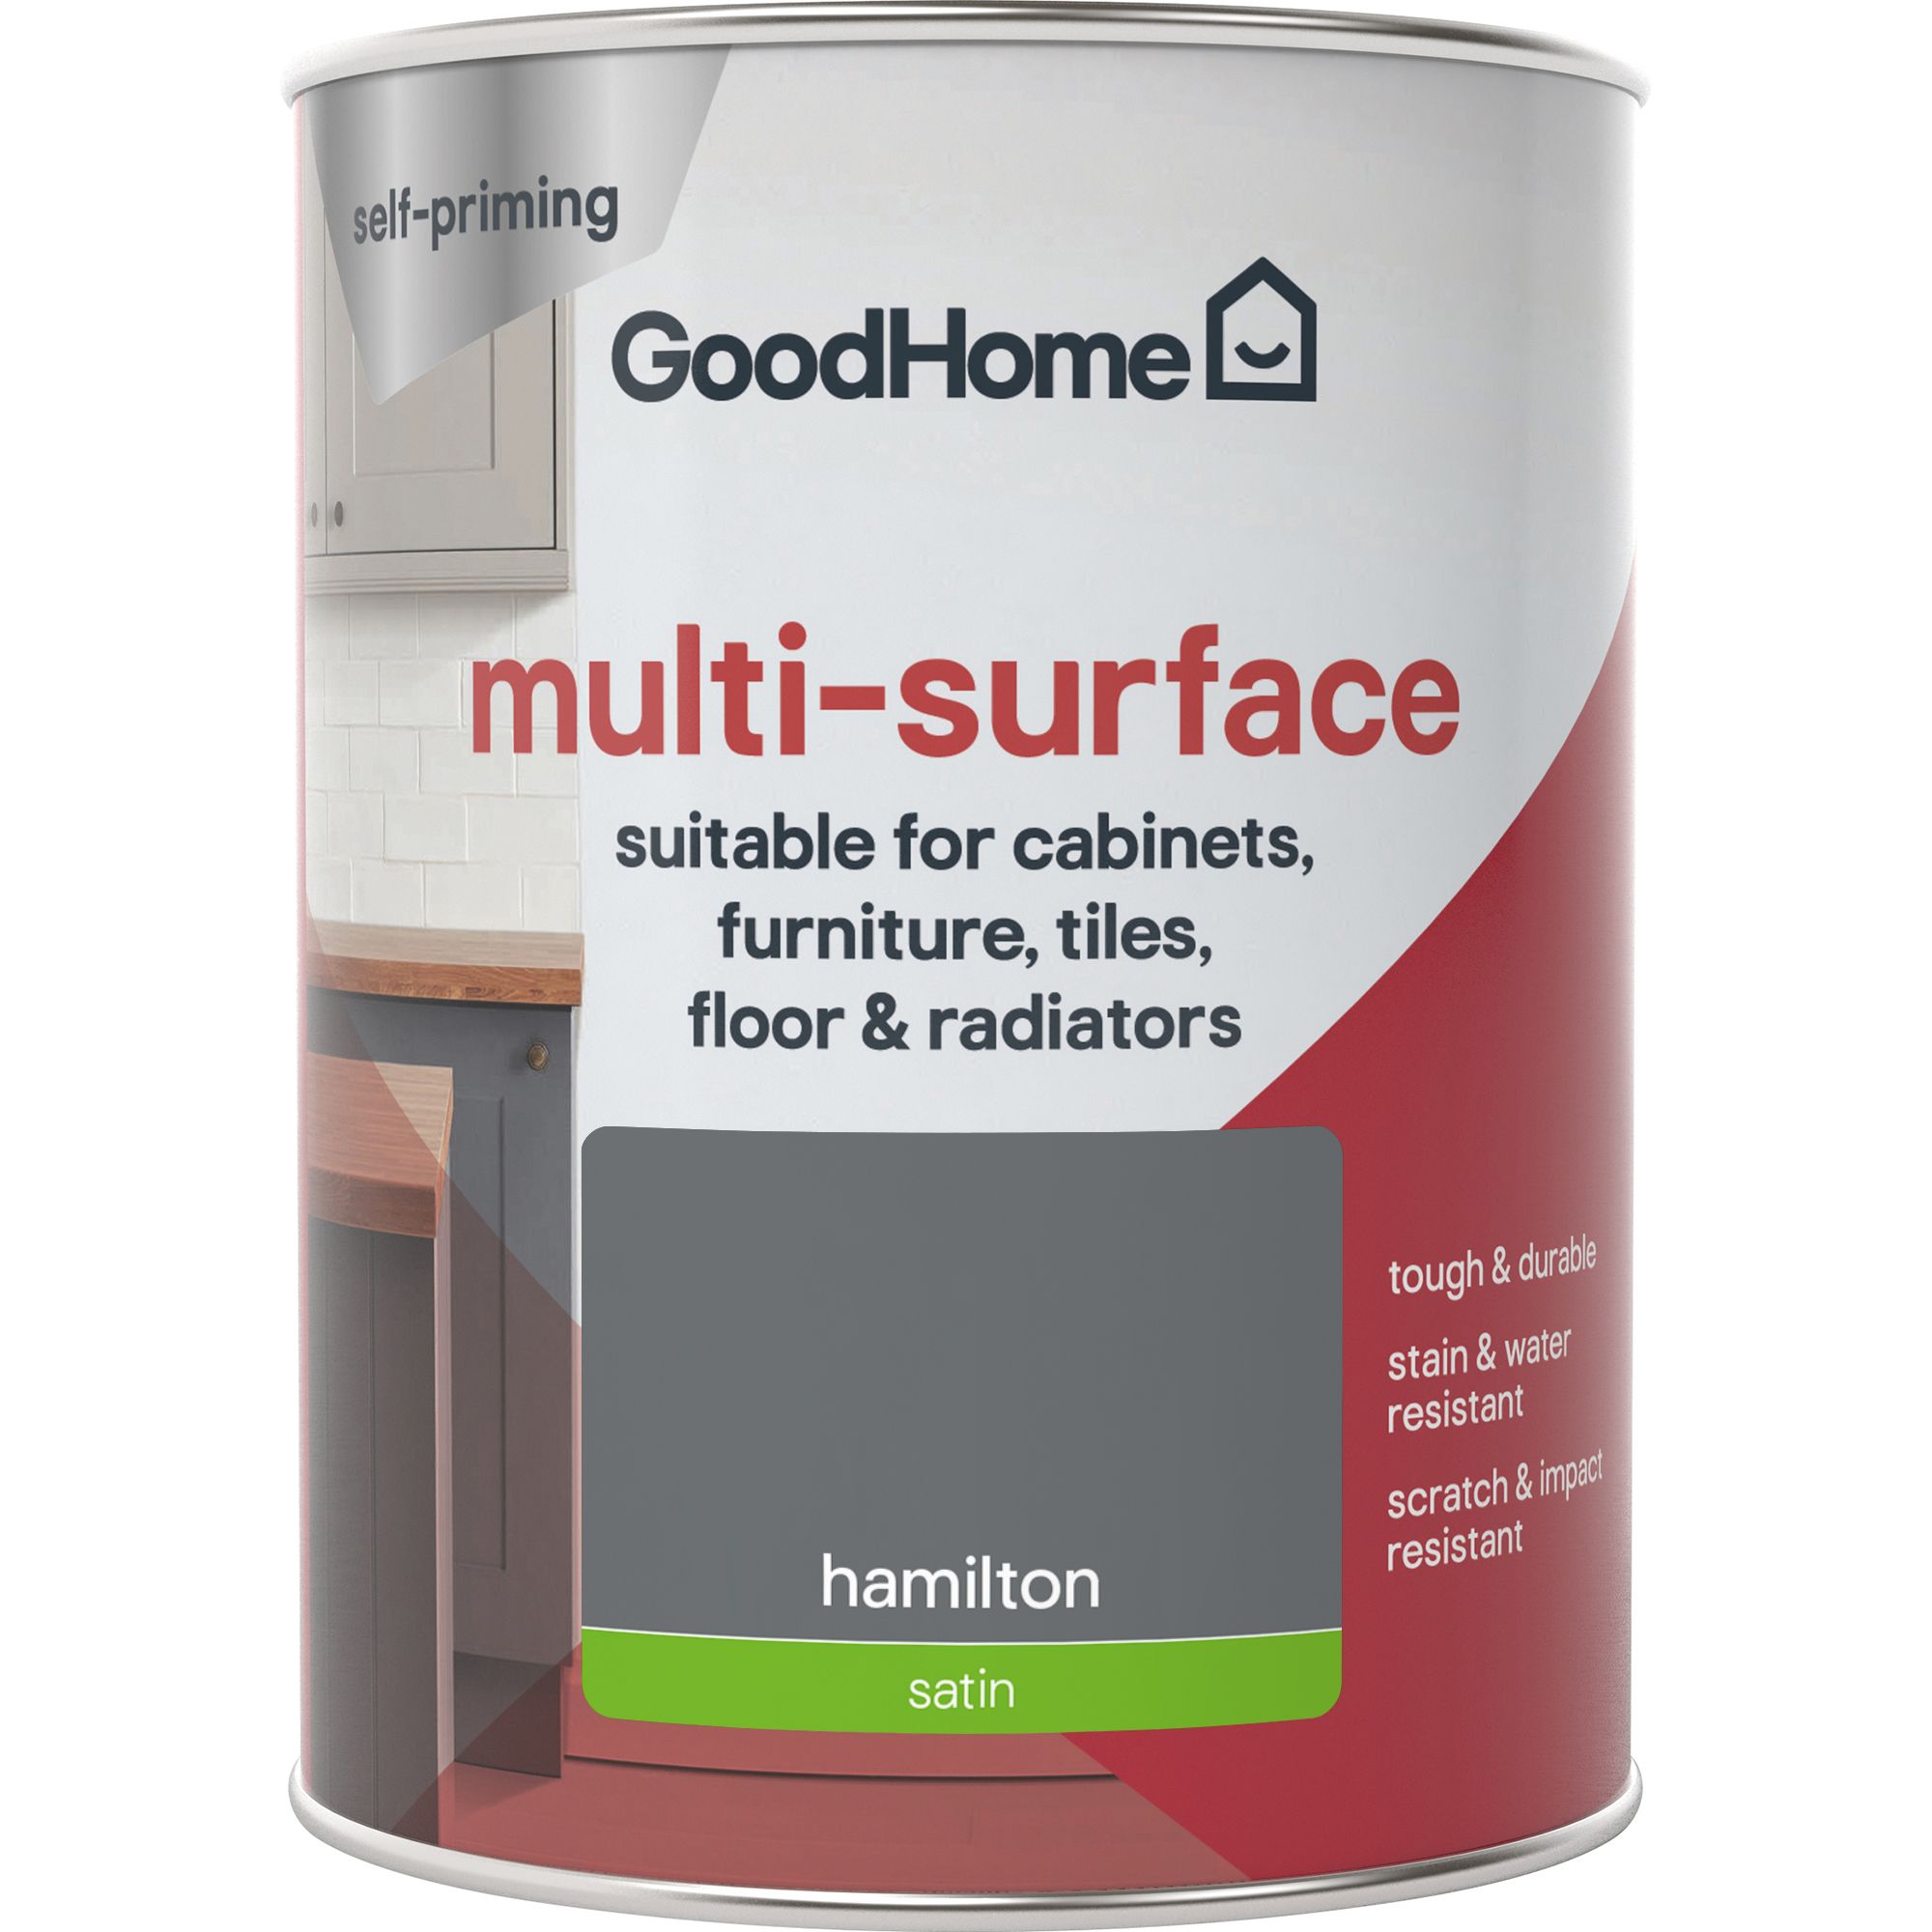 GoodHome Durable Hamilton Satin Multi-surface paint, 750ml